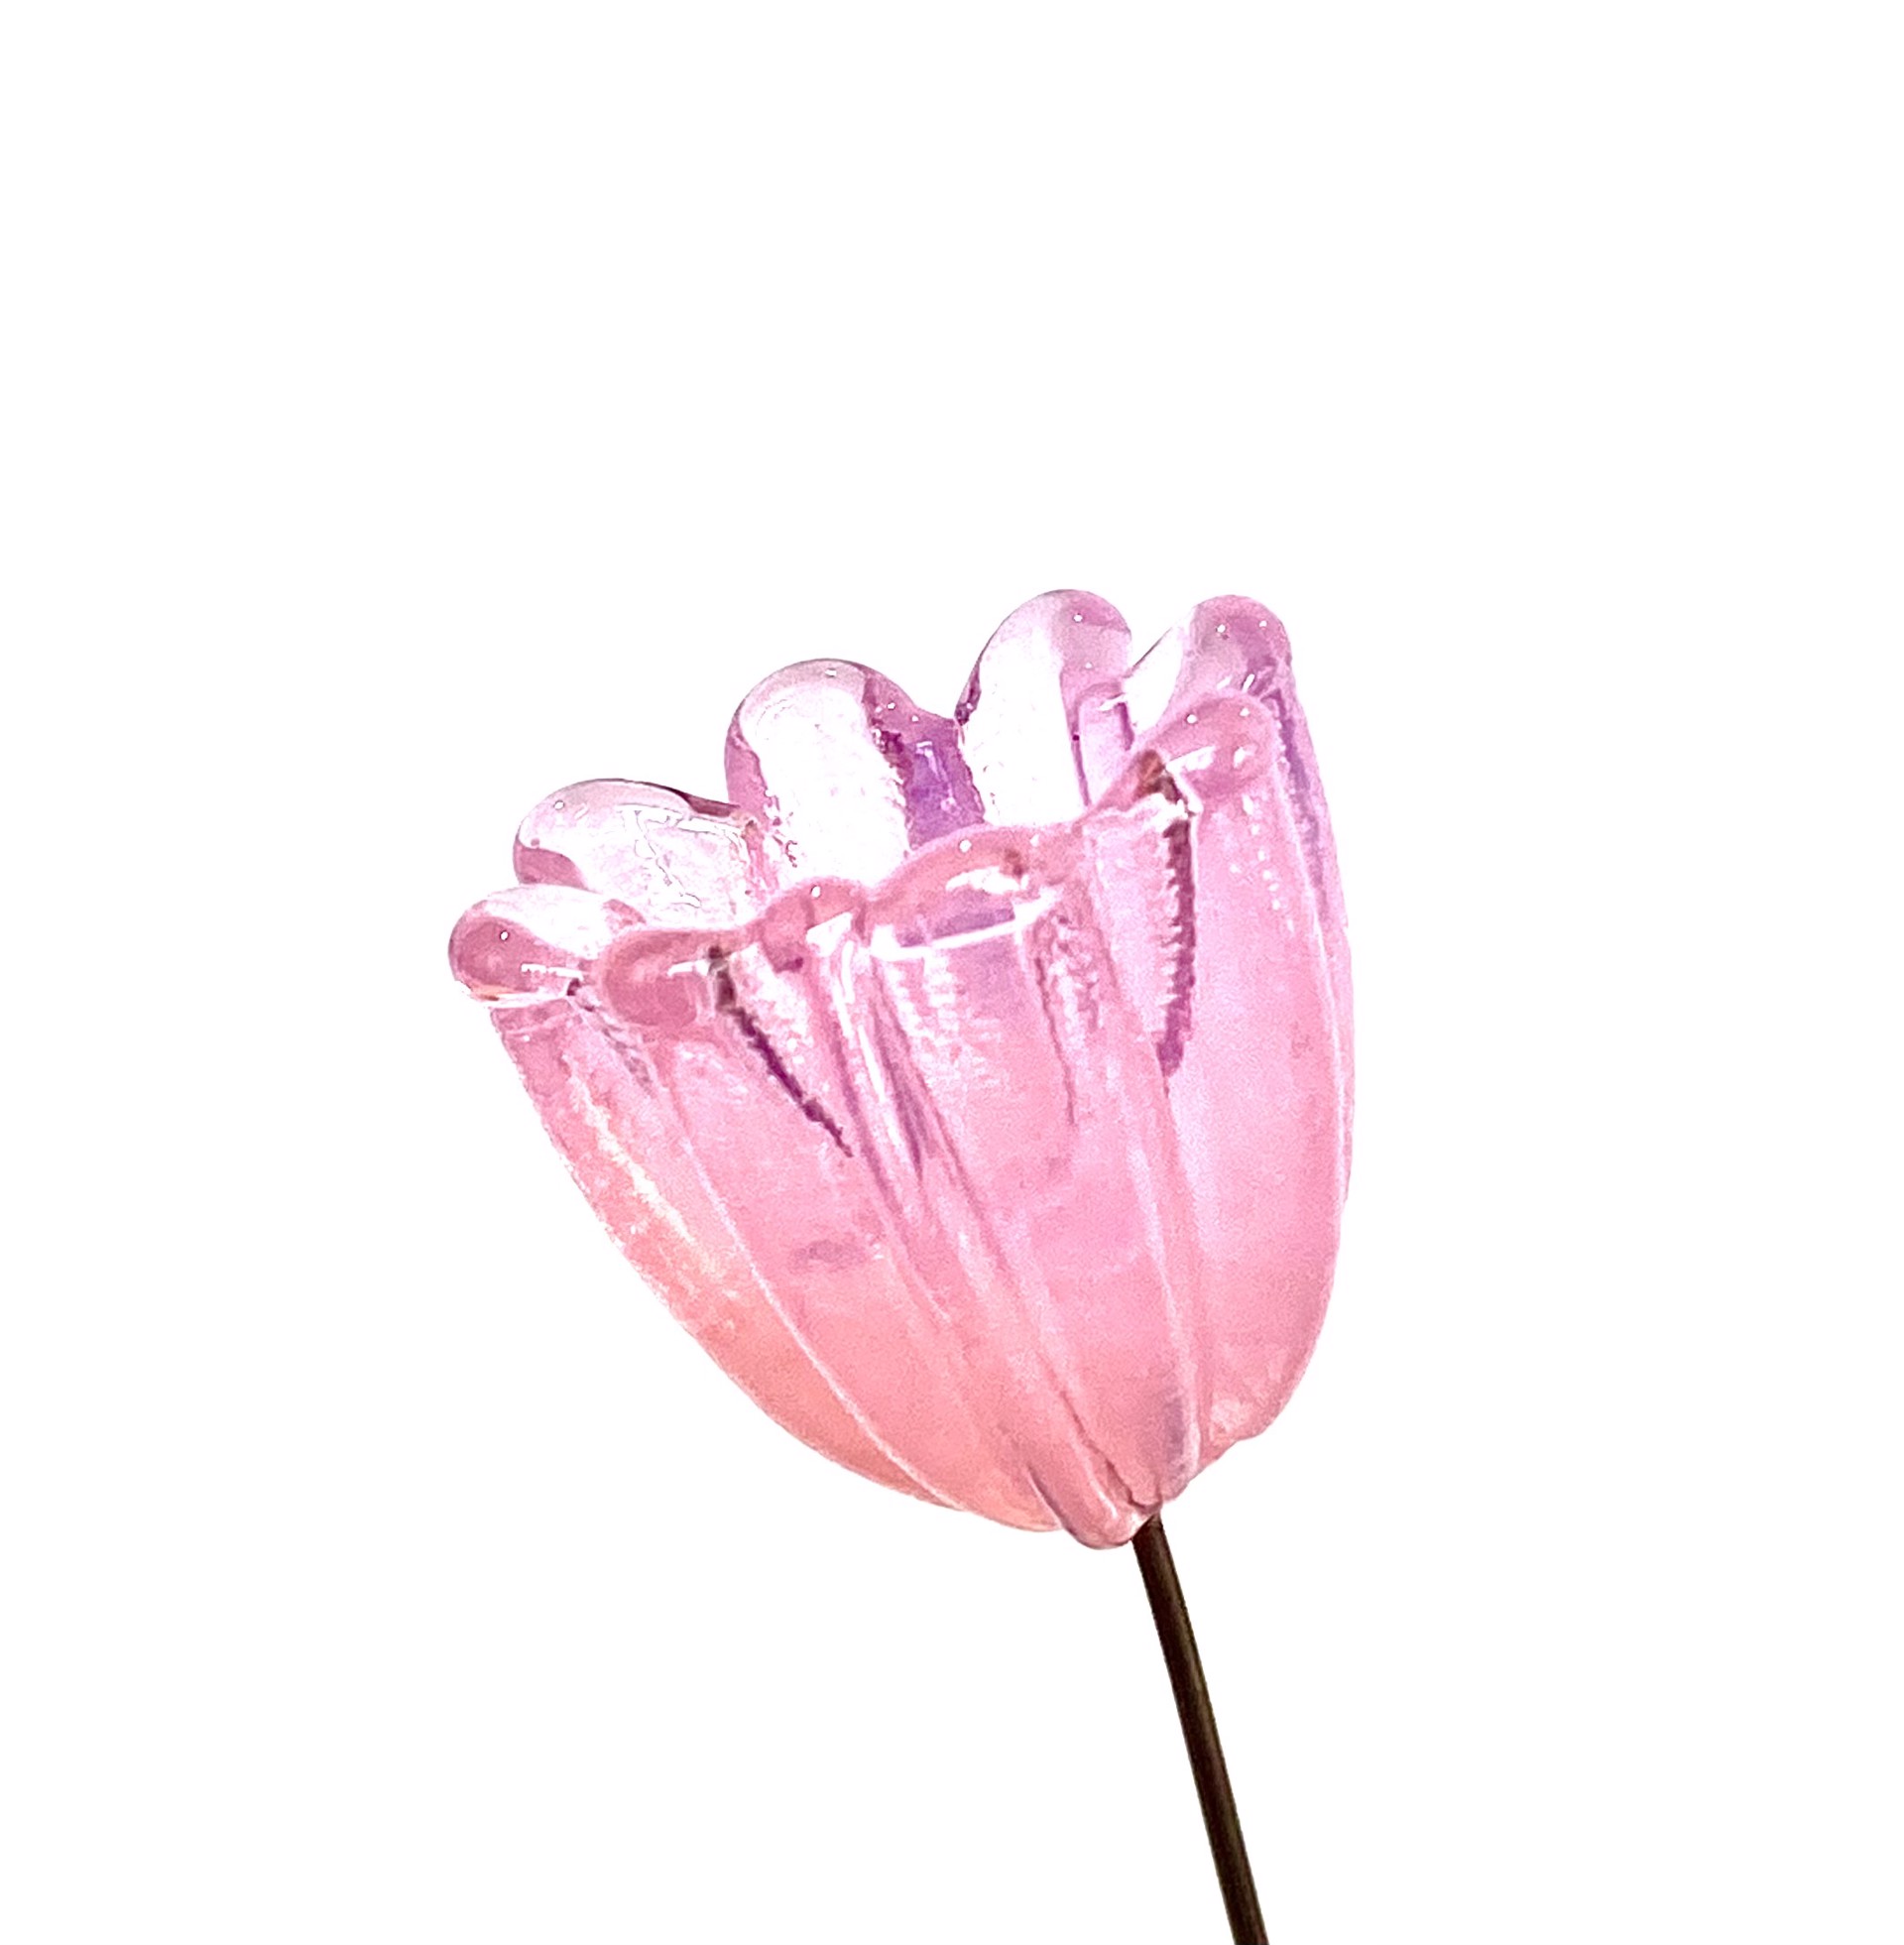 Glass Translucent Pink Bud Flower by Emelie Hebert